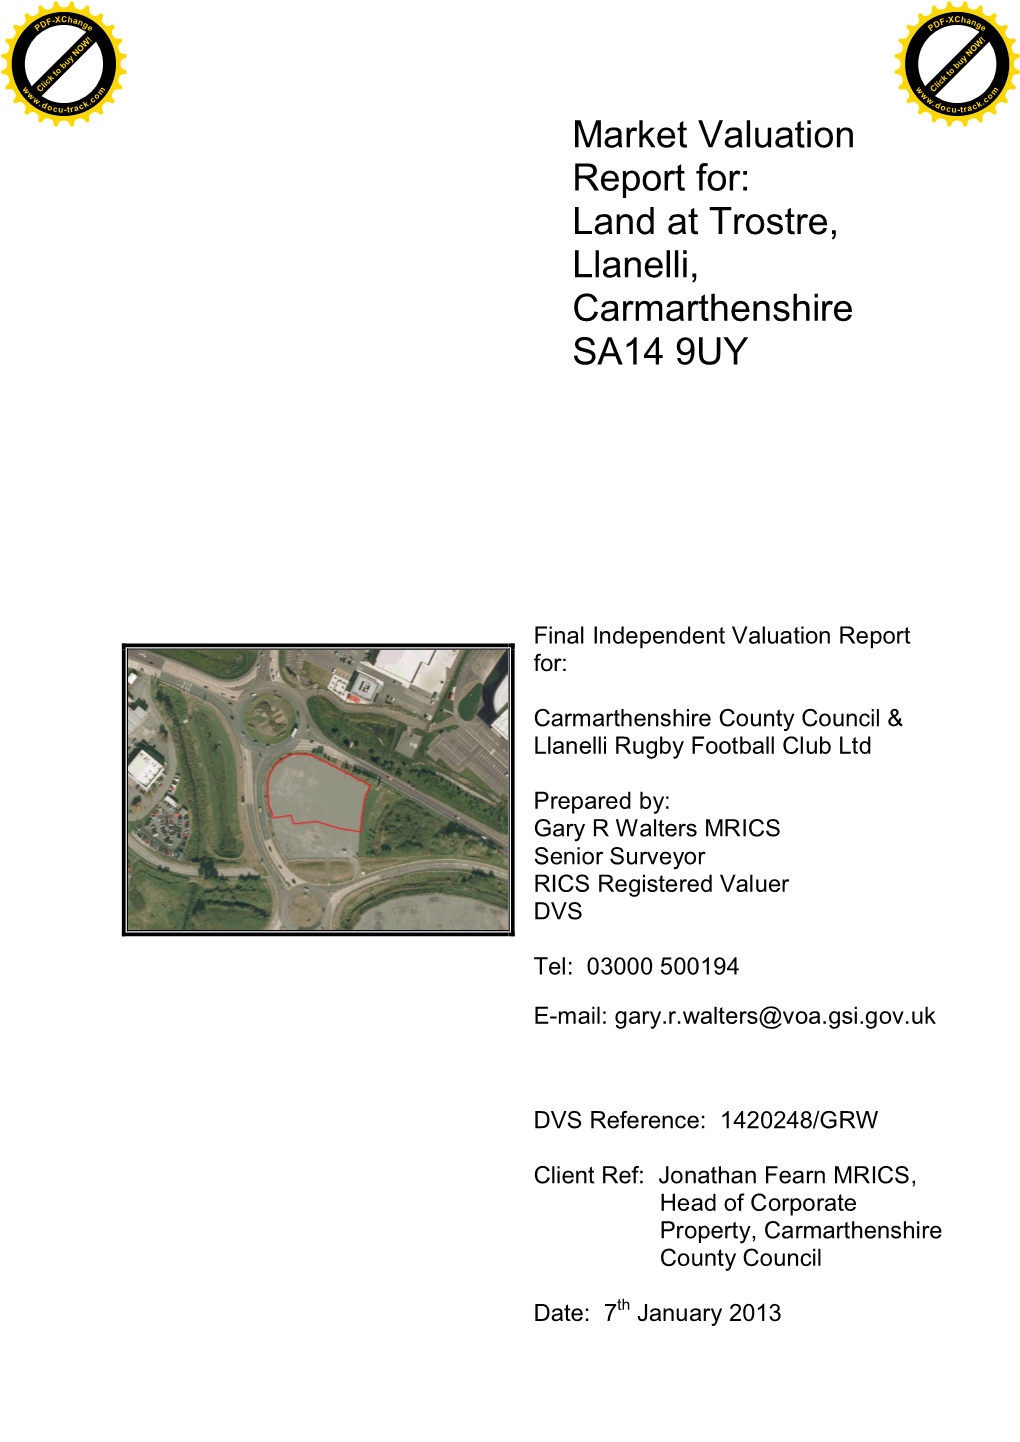 Land at Trostre, Llanelli, Carmarthenshire SA14 9UY